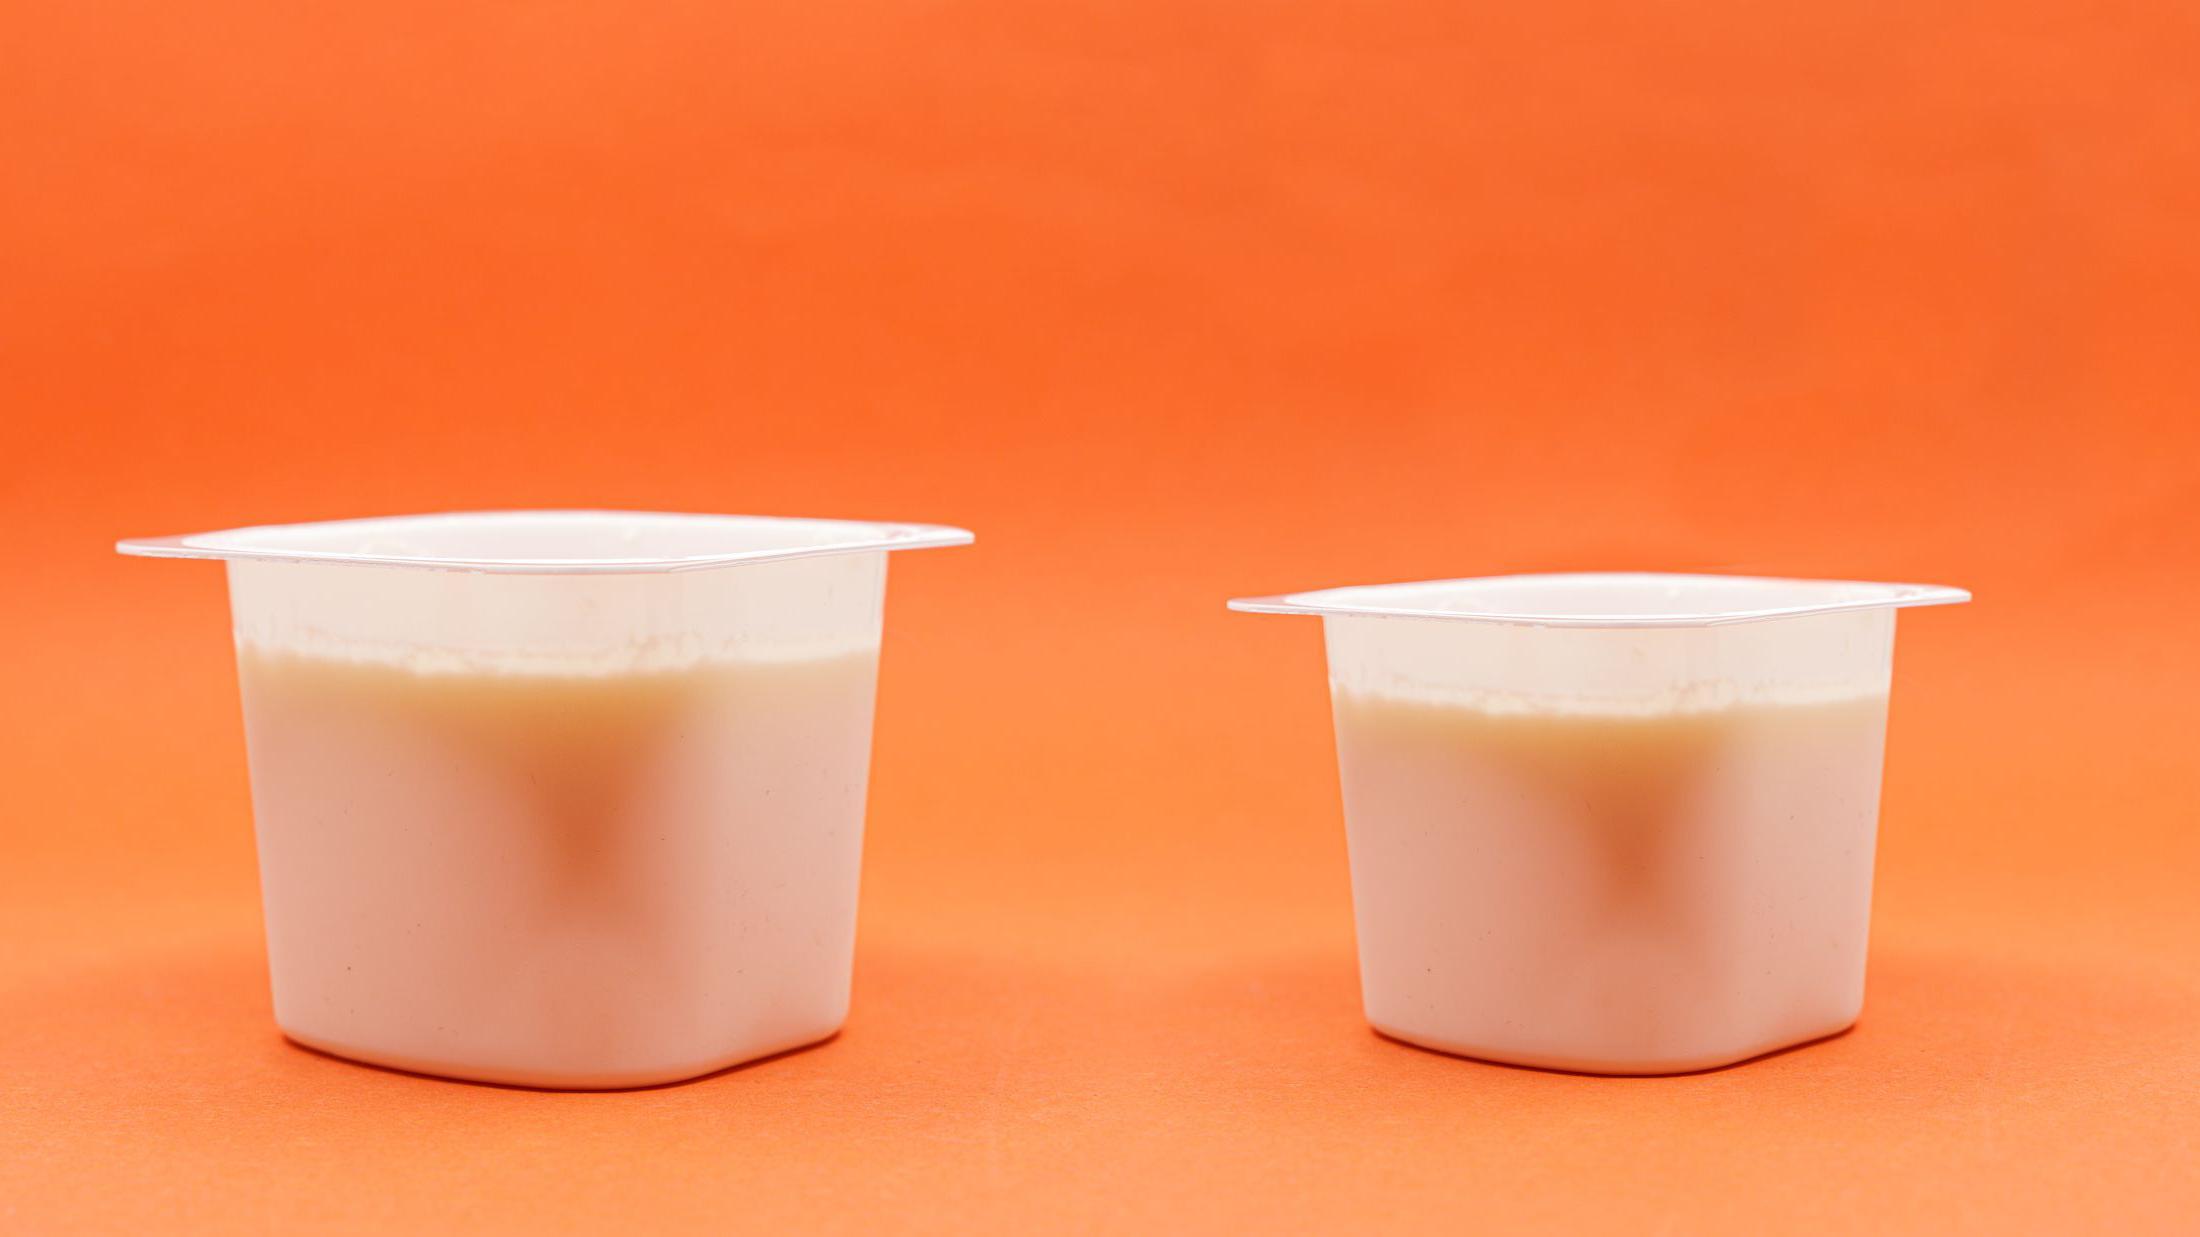 Dos yogures de diferente tamaño